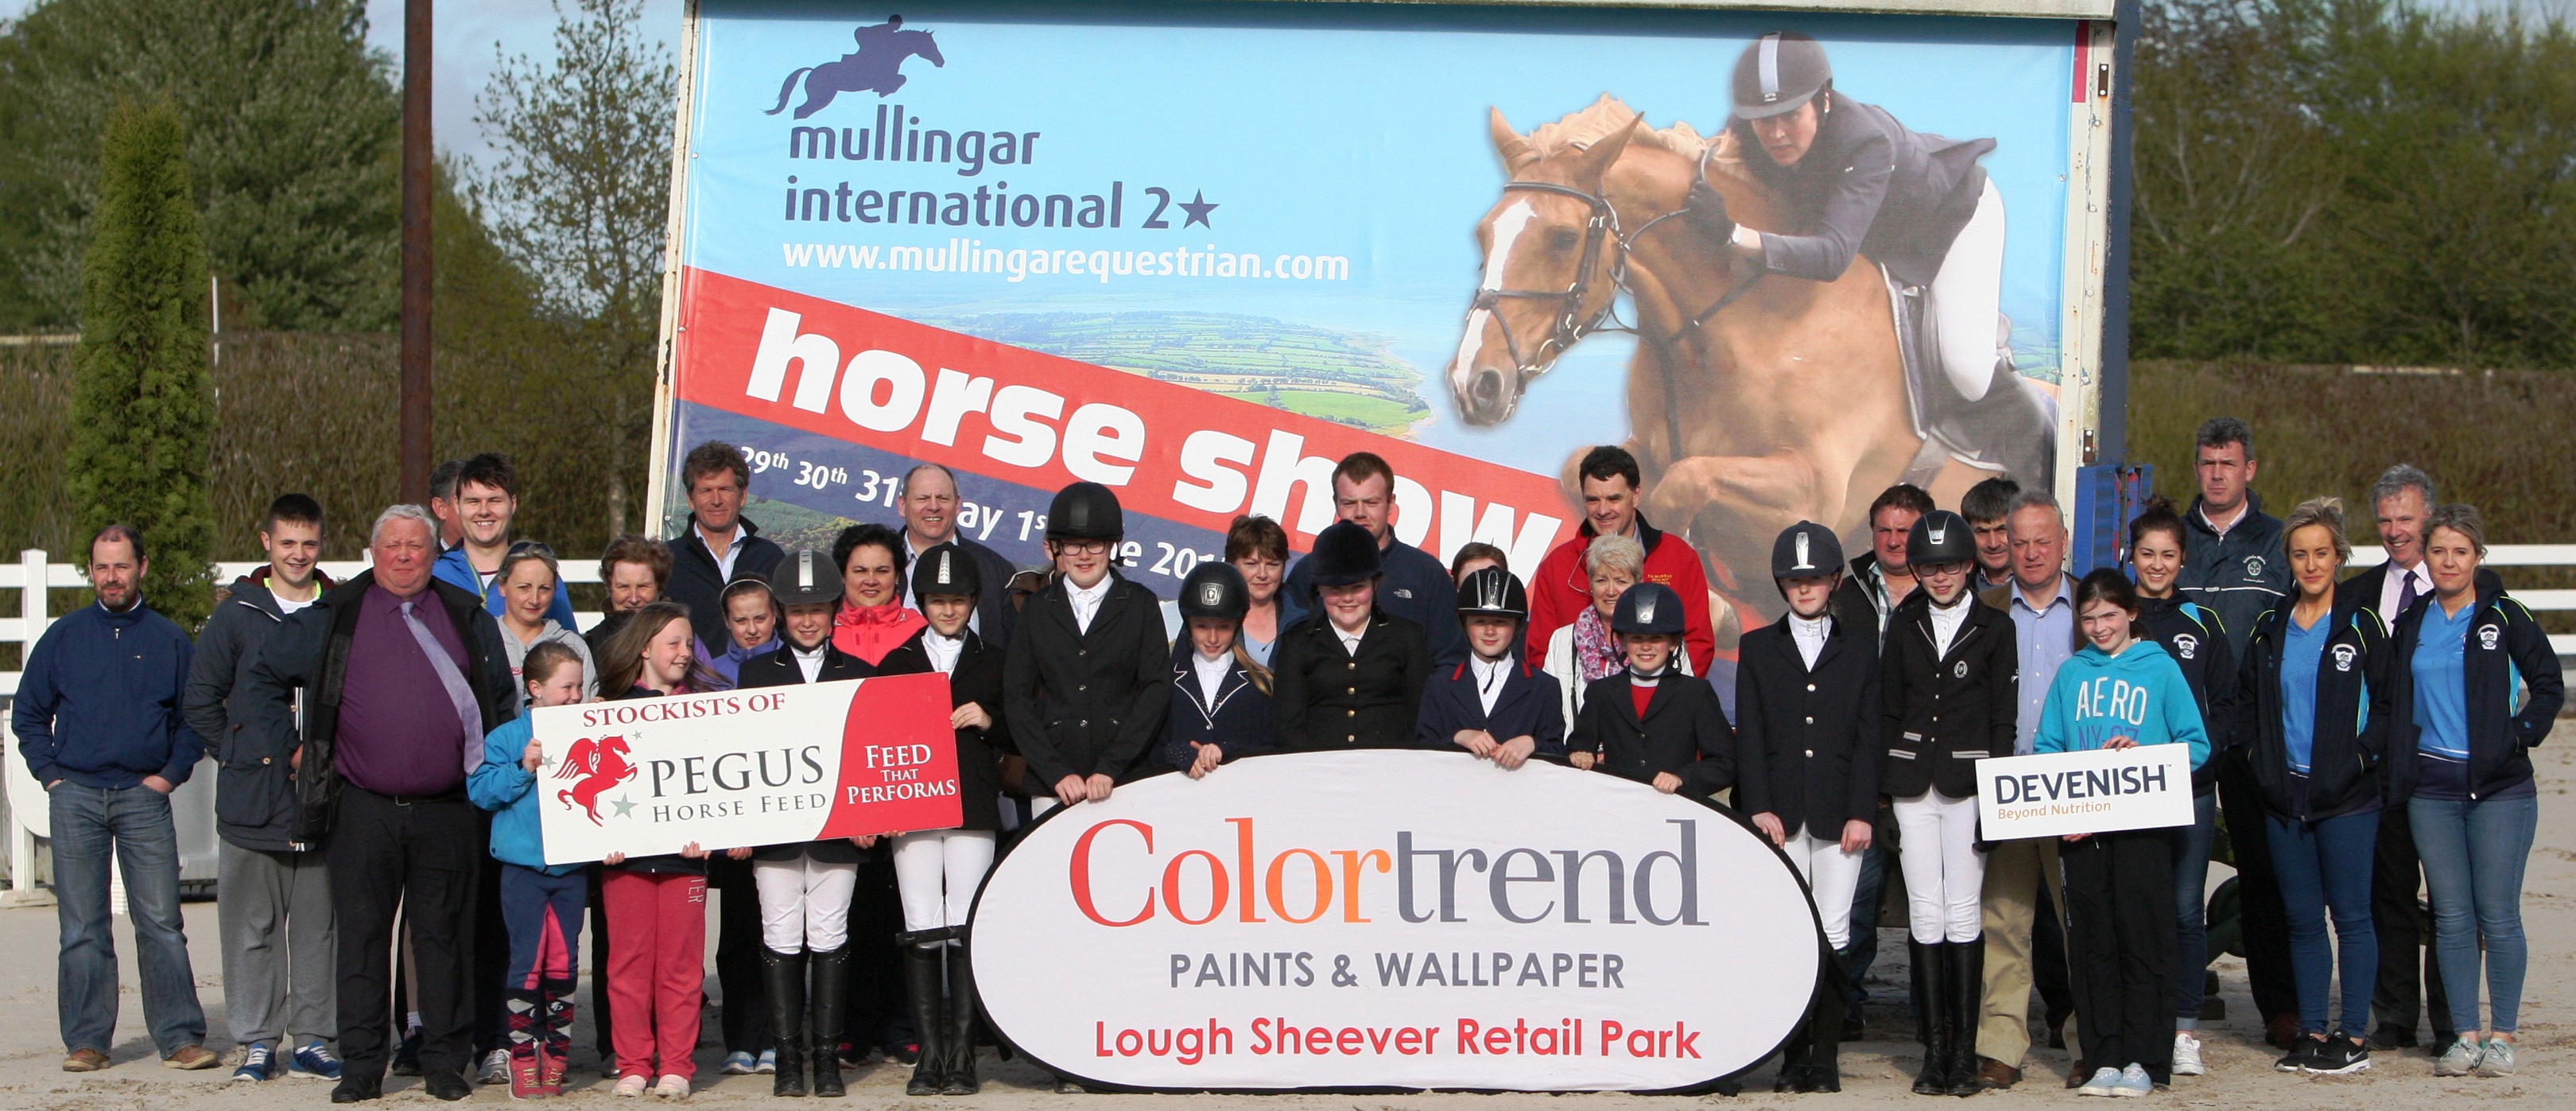 Mullingar International Horseshow Sponsors